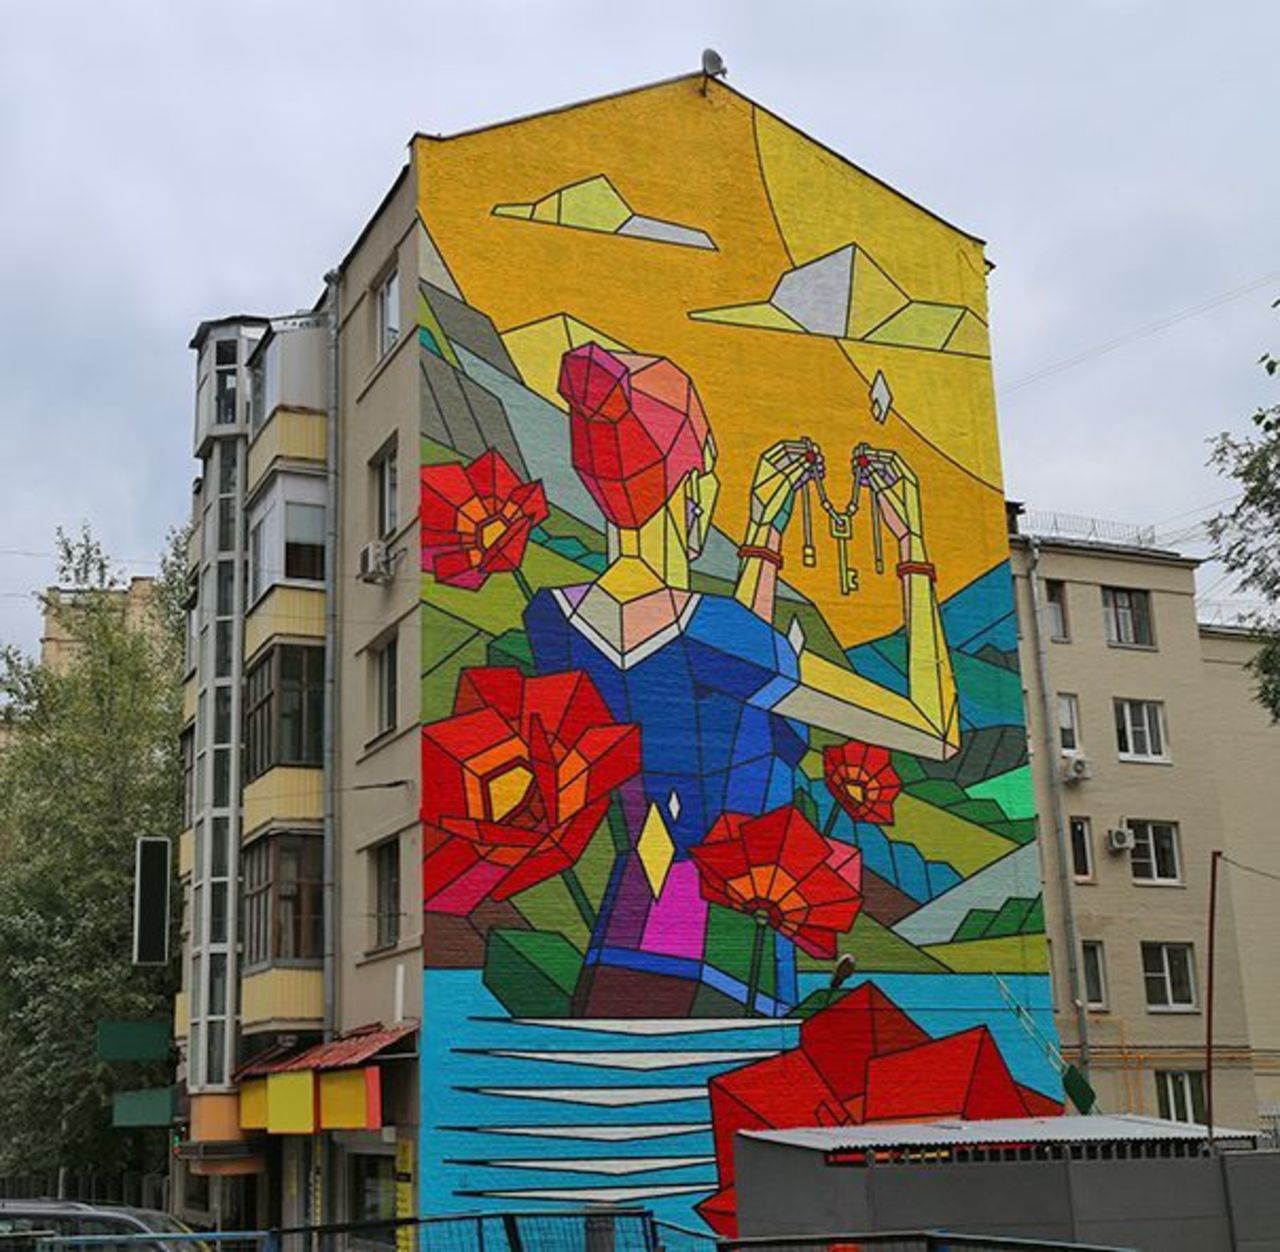 Aske#mural #streetart #art #graffiti https://t.co/LrcH1IU4E0